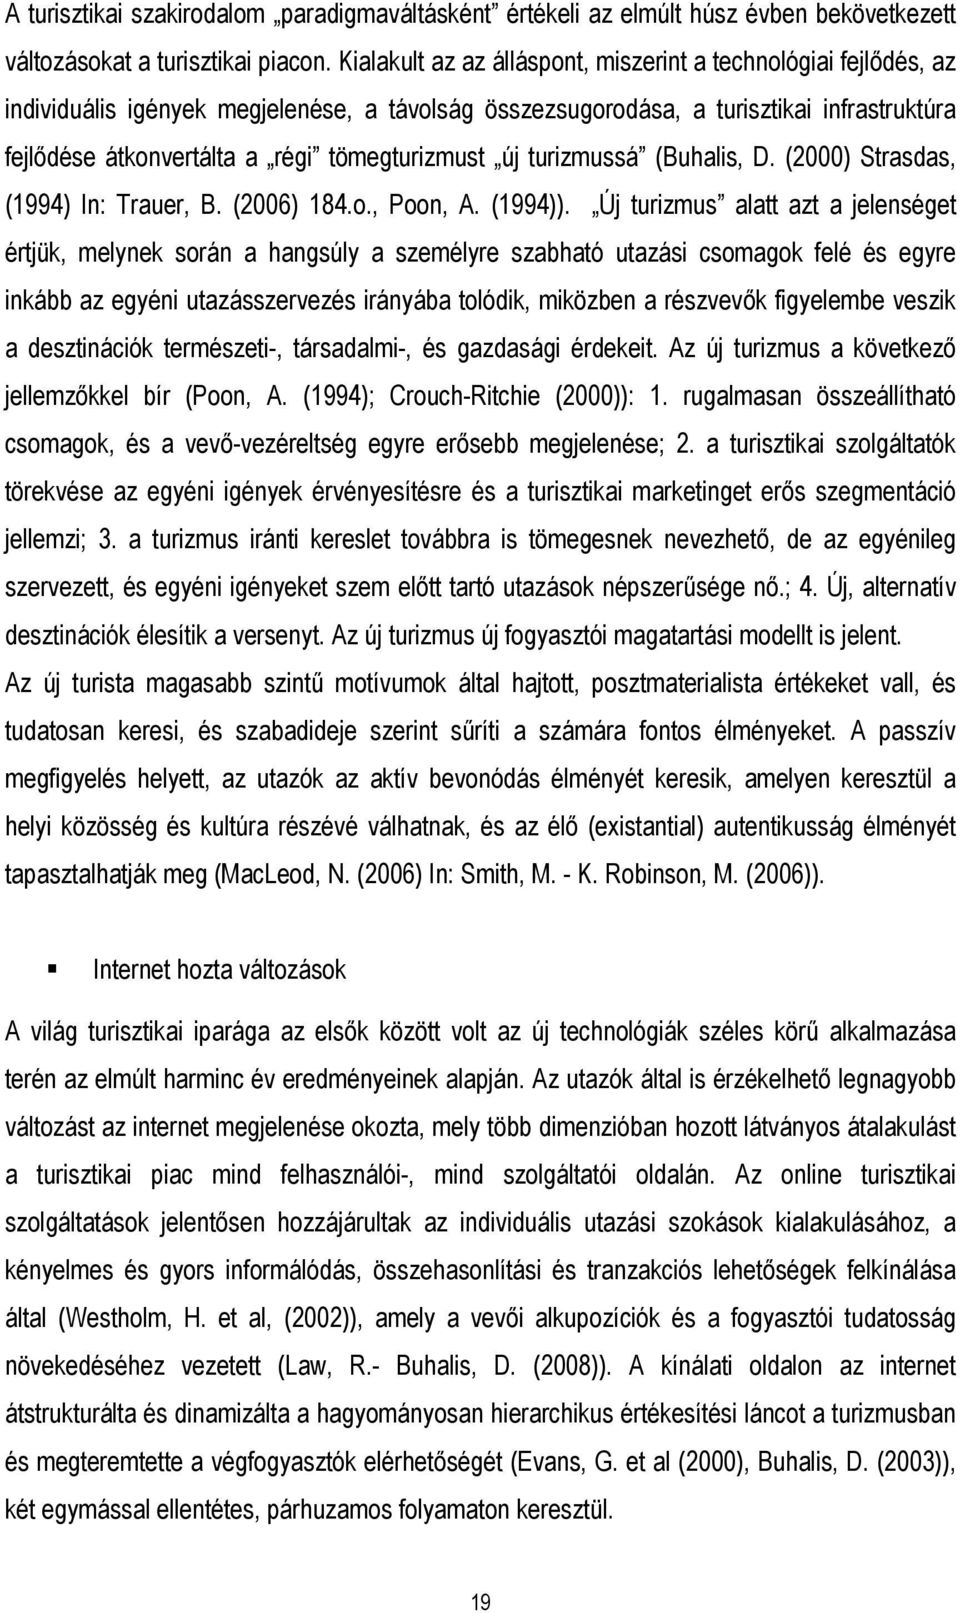 tömegturizmust új turizmussá (Buhalis, D. (2000) Strasdas, (1994) In: Trauer, B. (2006) 184.o., Poon, A. (1994)).